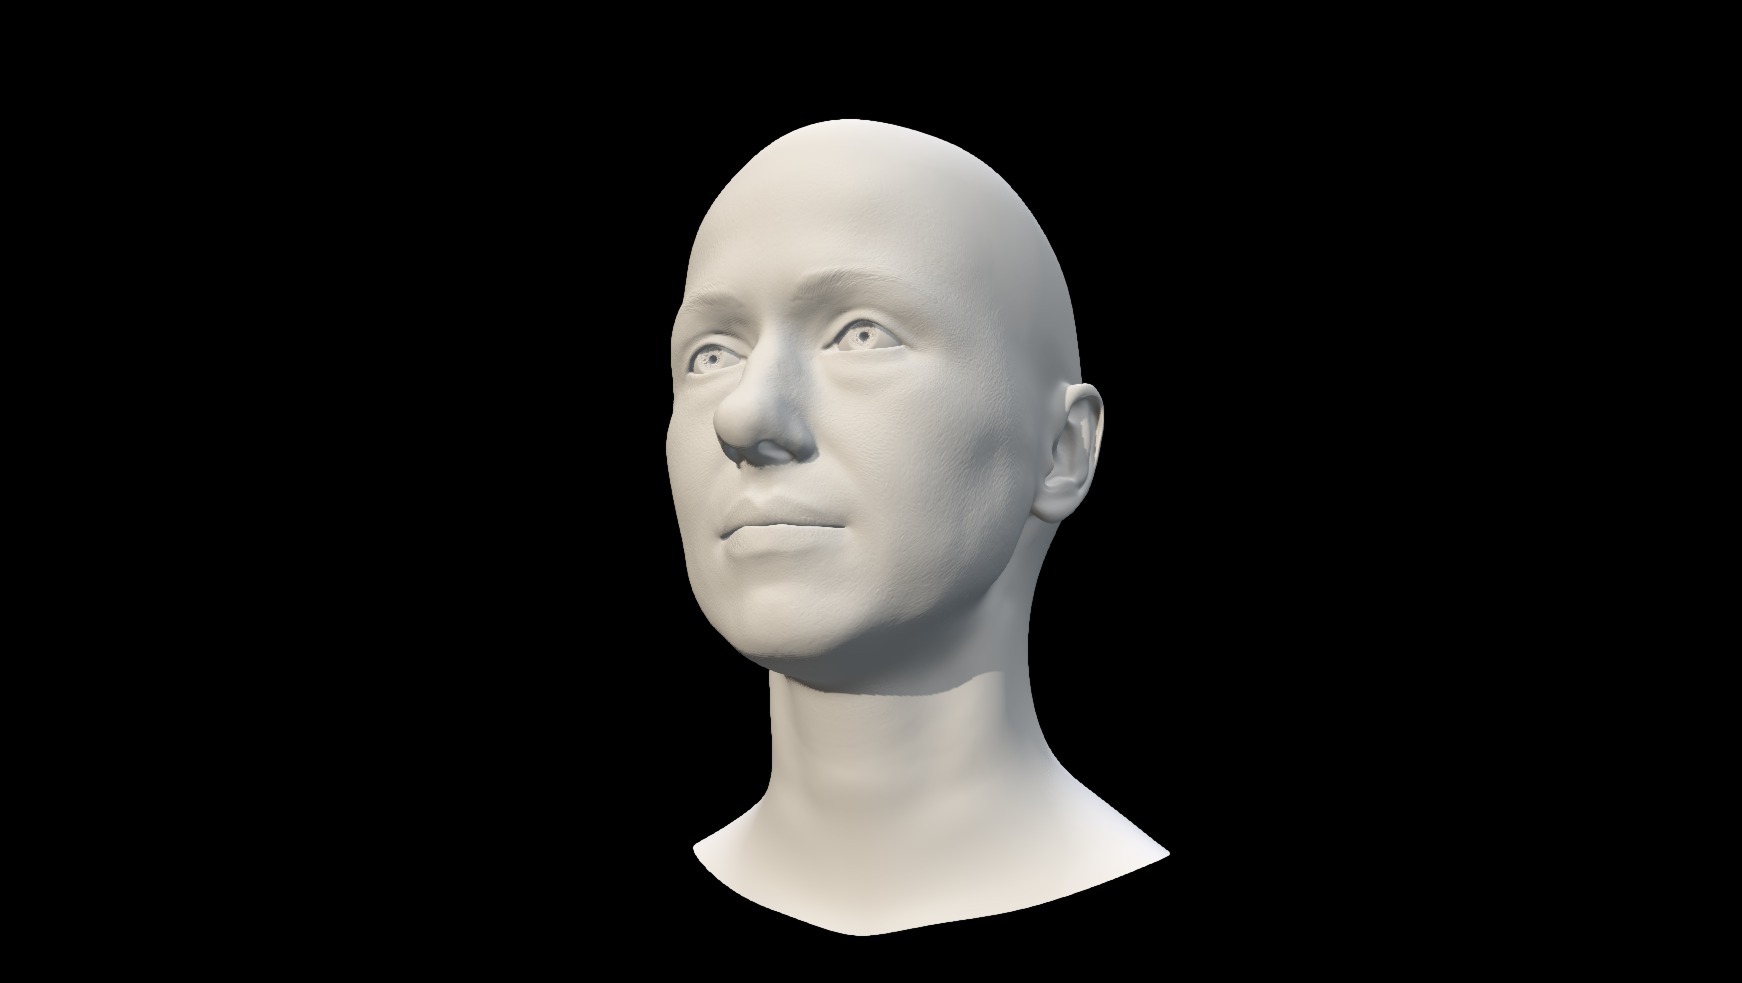 Caucasian Adult Female Head Scan 3d Model By Anatomy Next A4s Ed6907d Sketchfab 9592